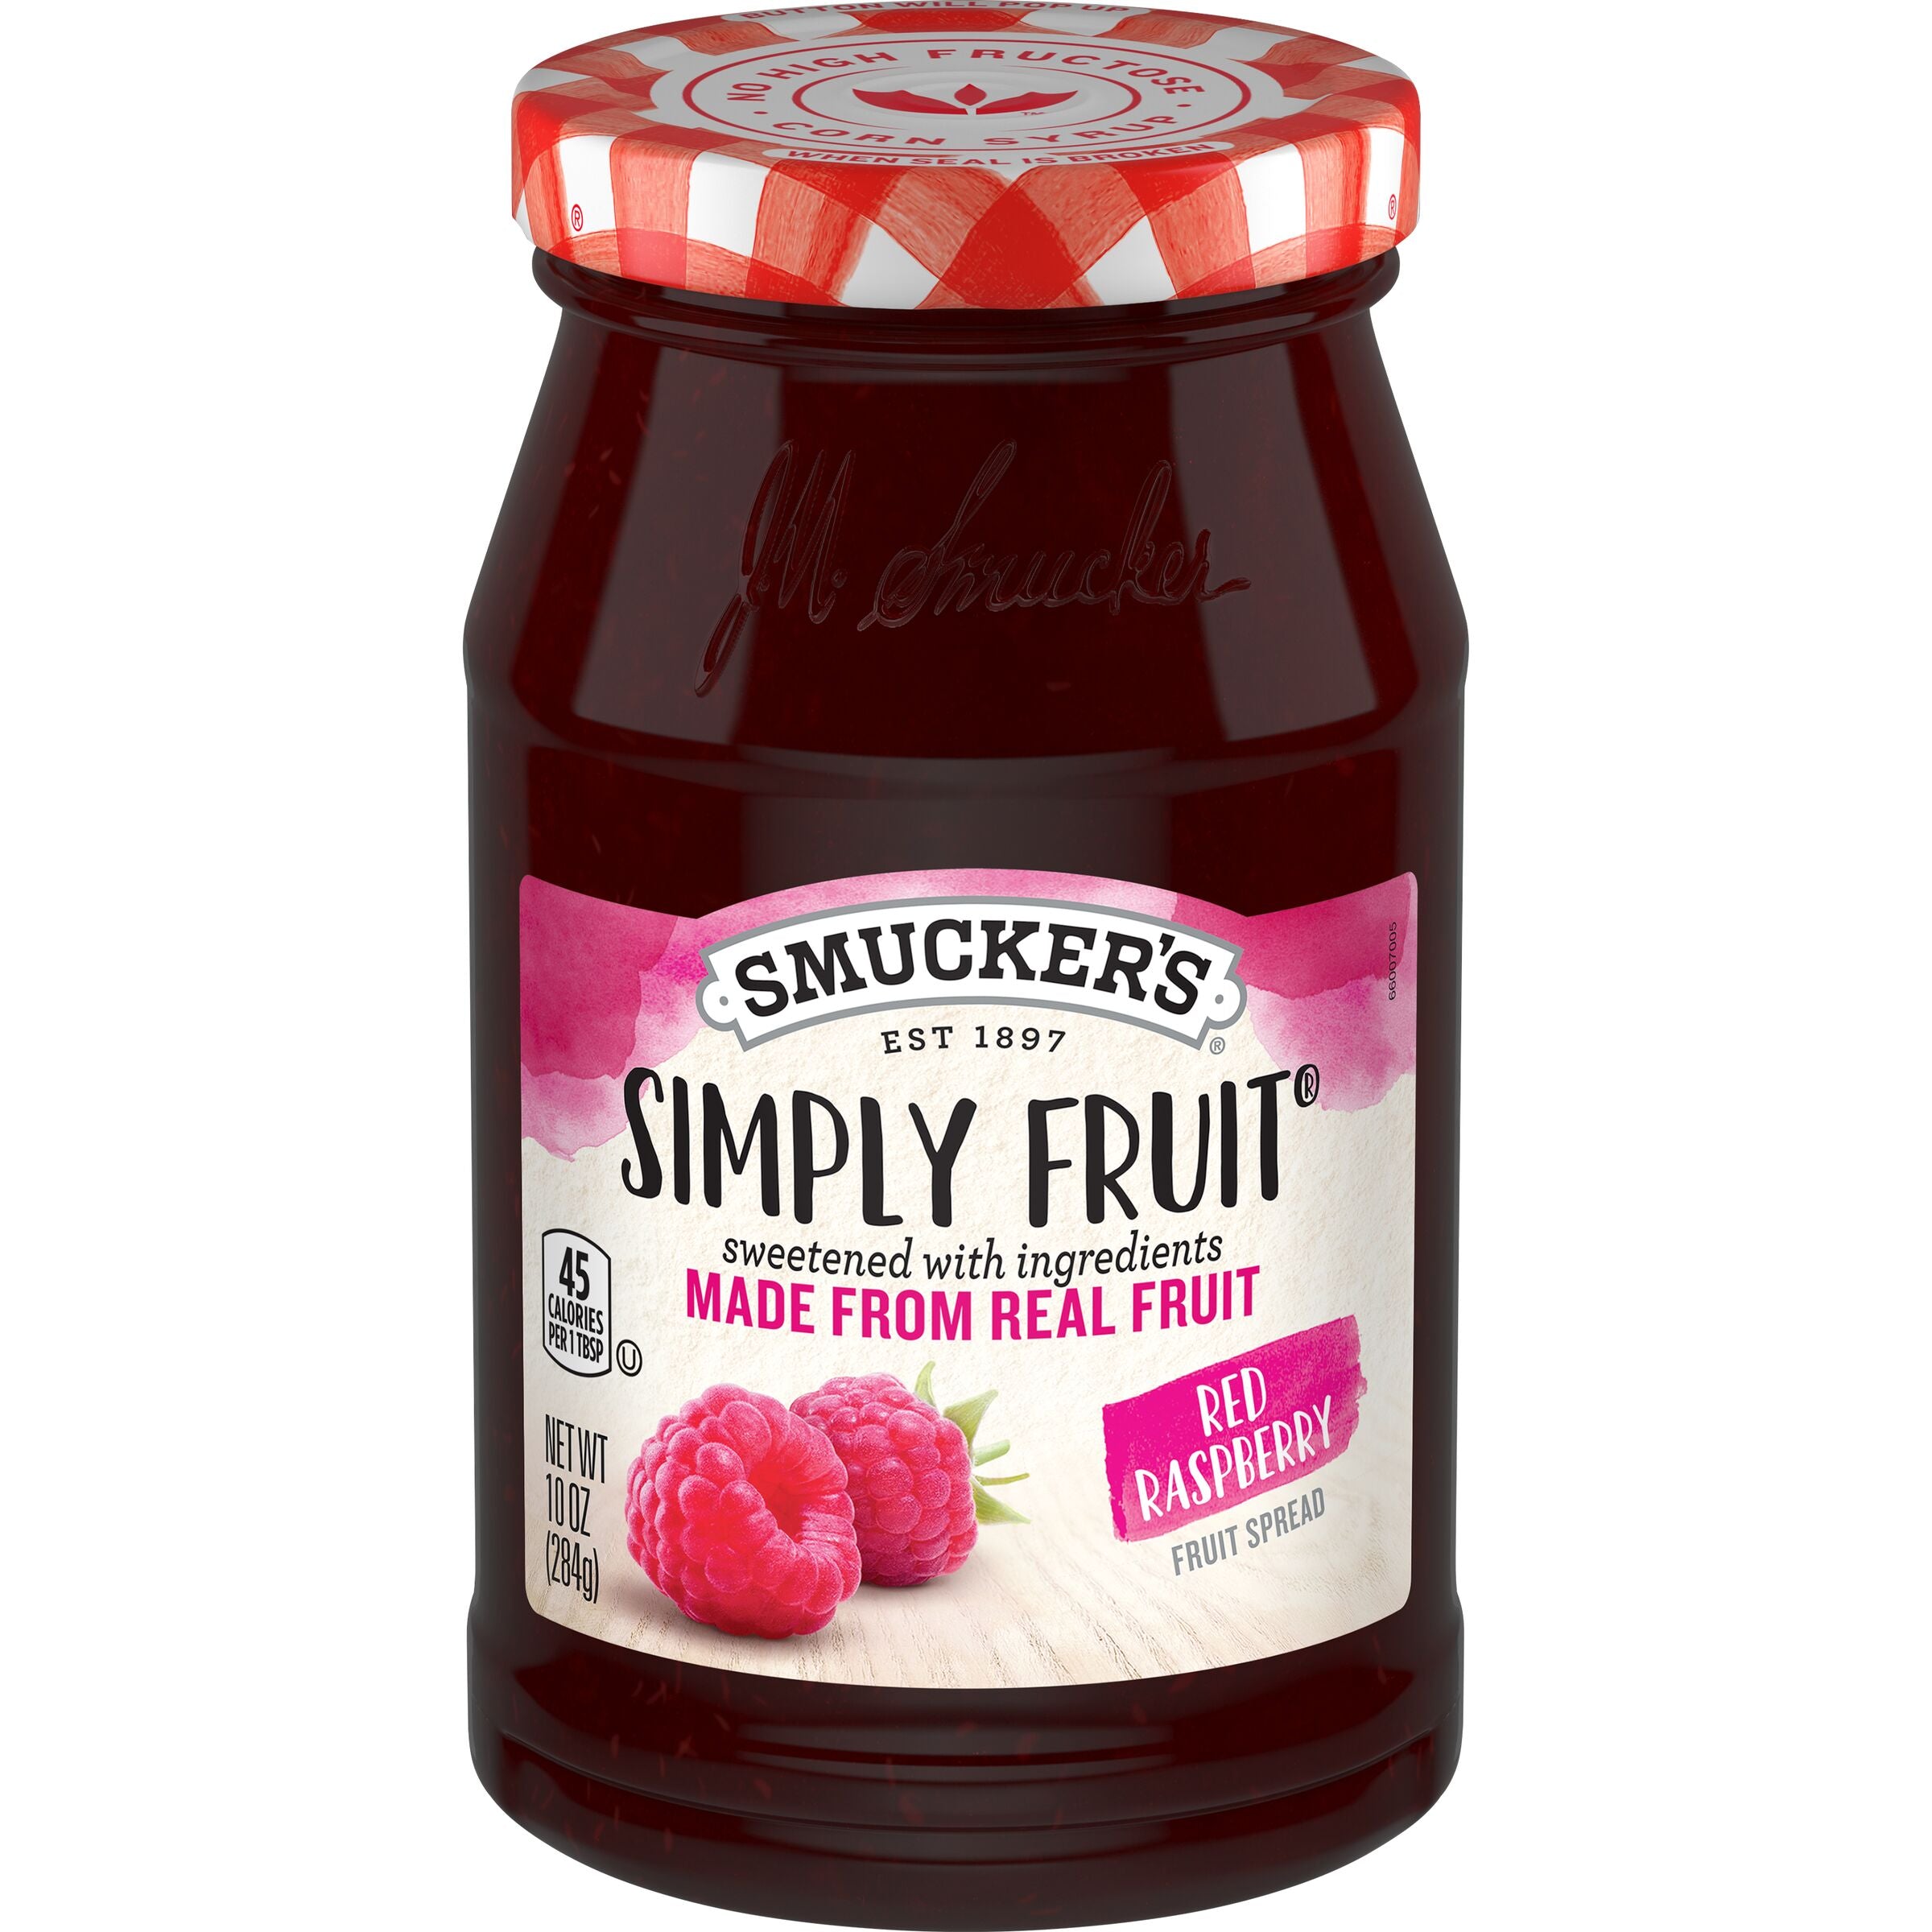 Smucker's Simply Fruit Red Raspberry Fruit Spread, 10 oz